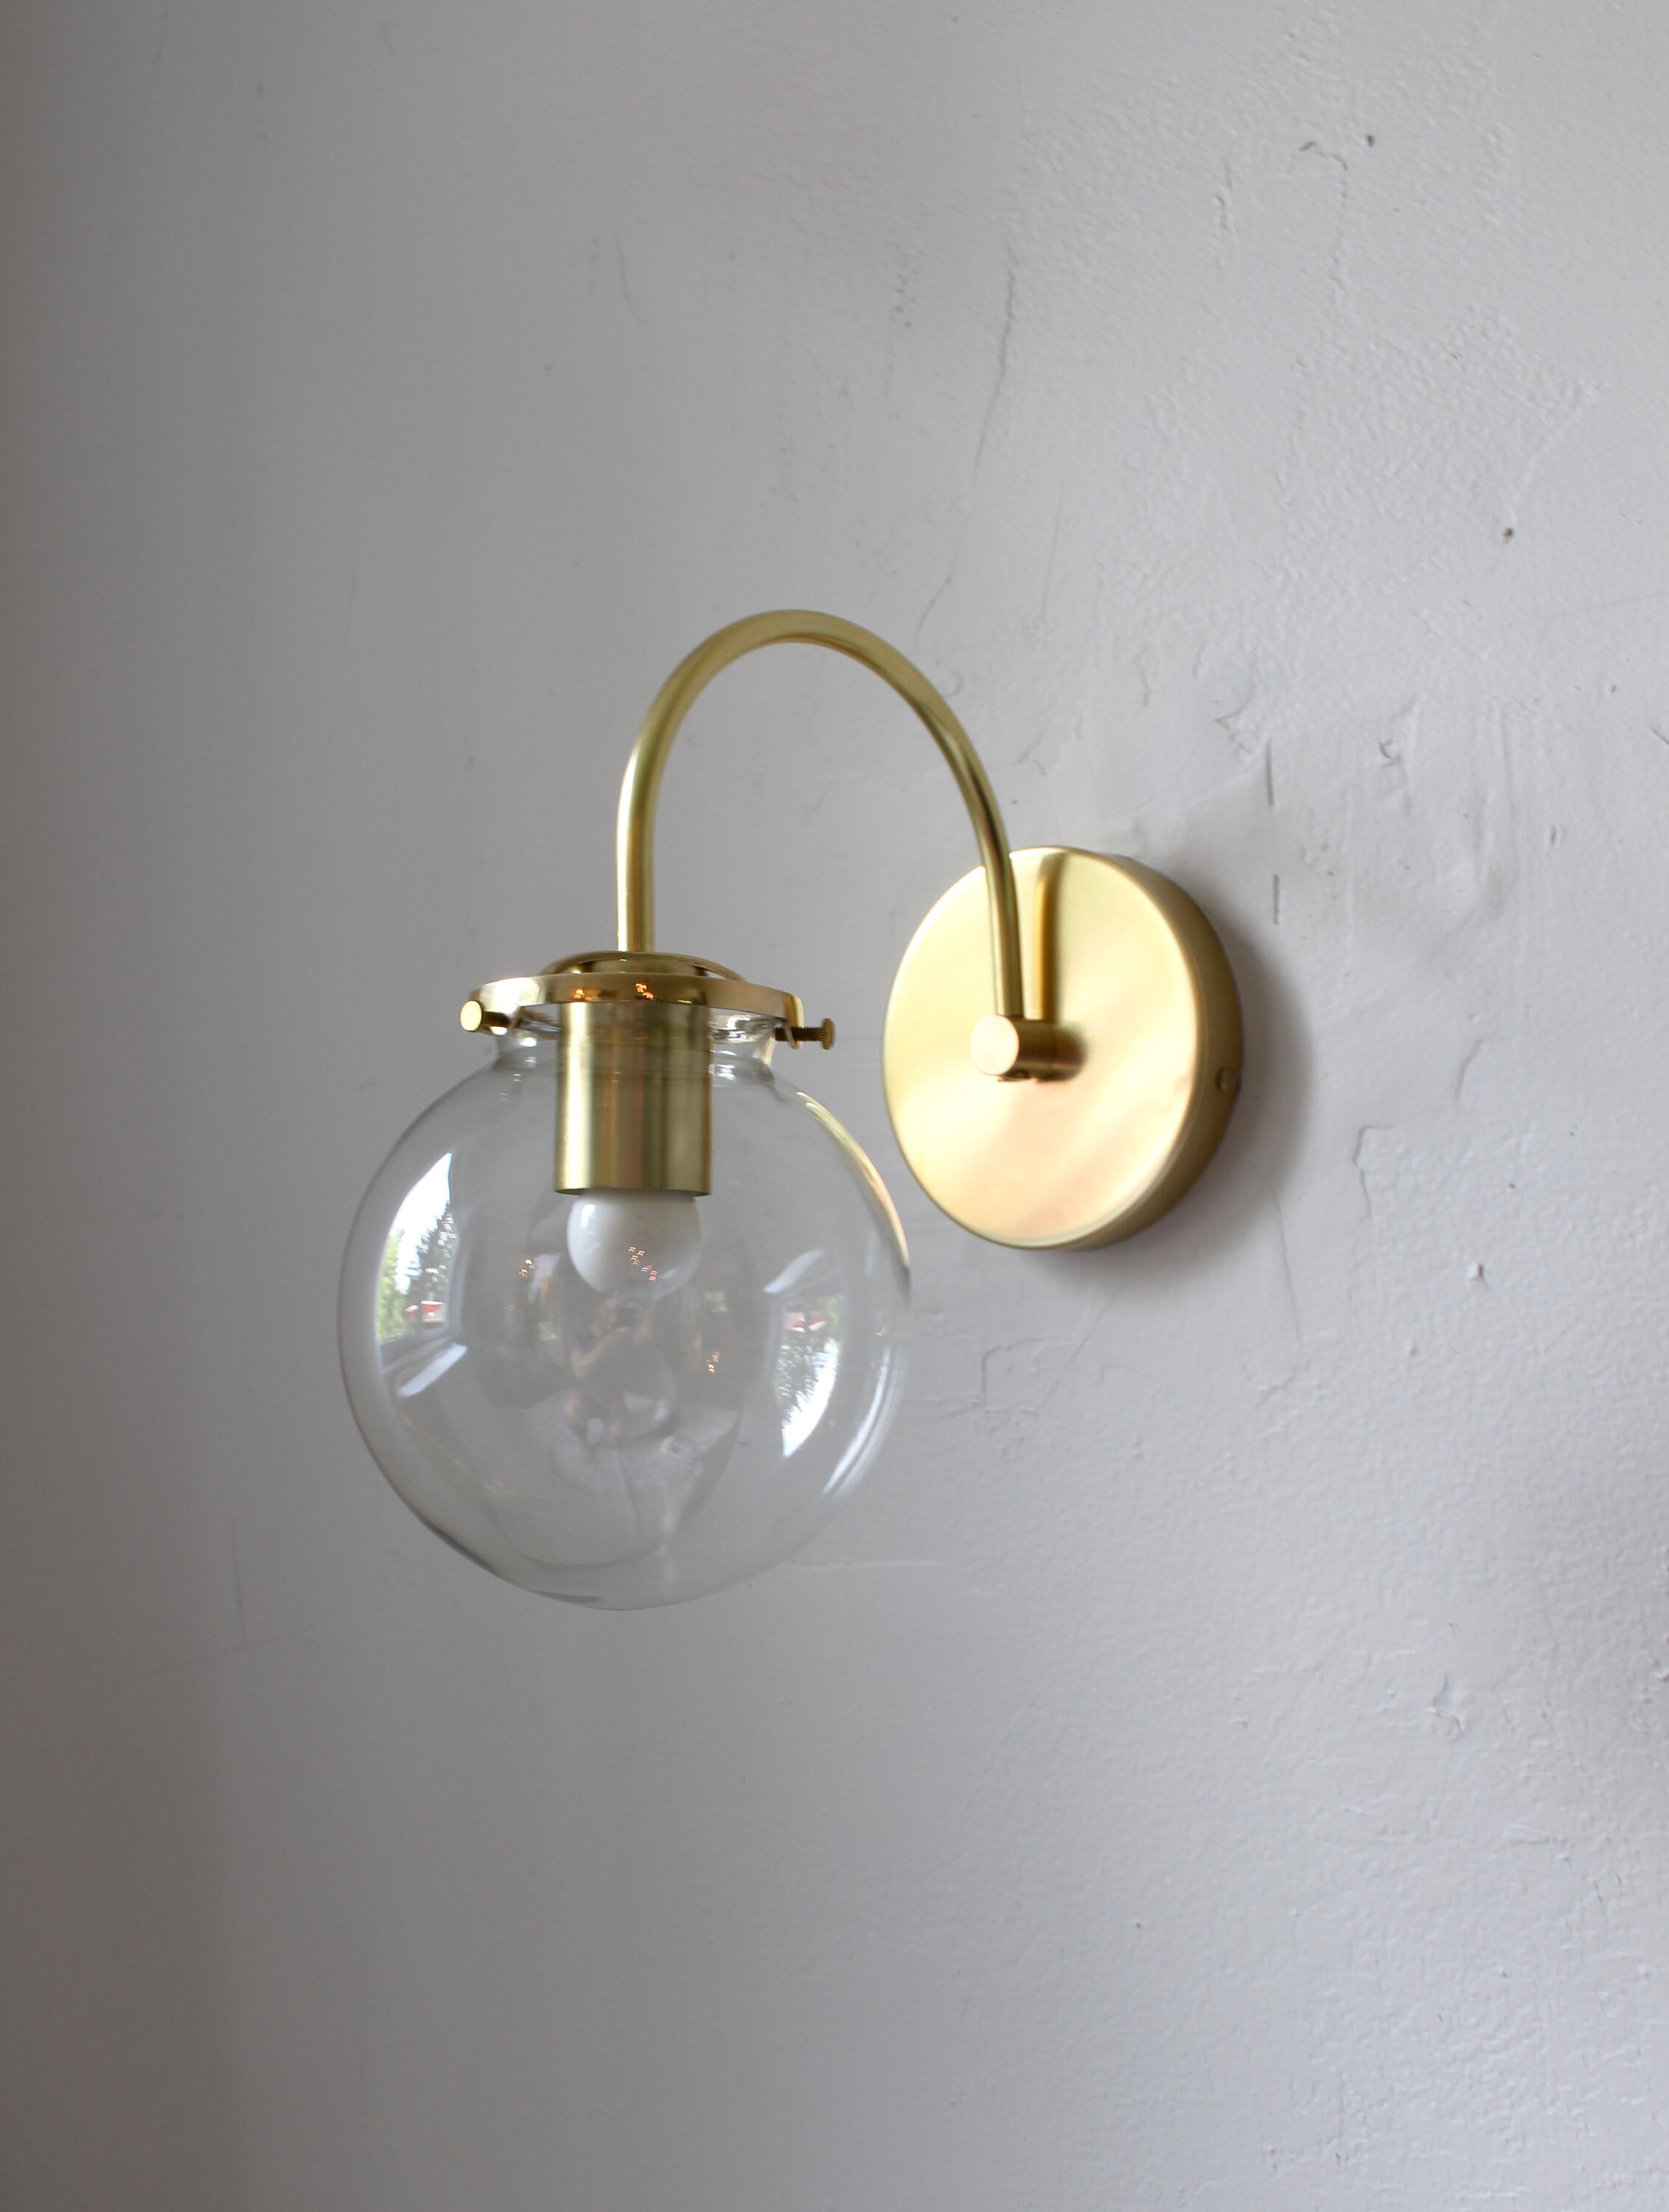 Details about   Vintage Brass Wall Sconce Modern Stunning Sputnik Mid Century Industrial Light 